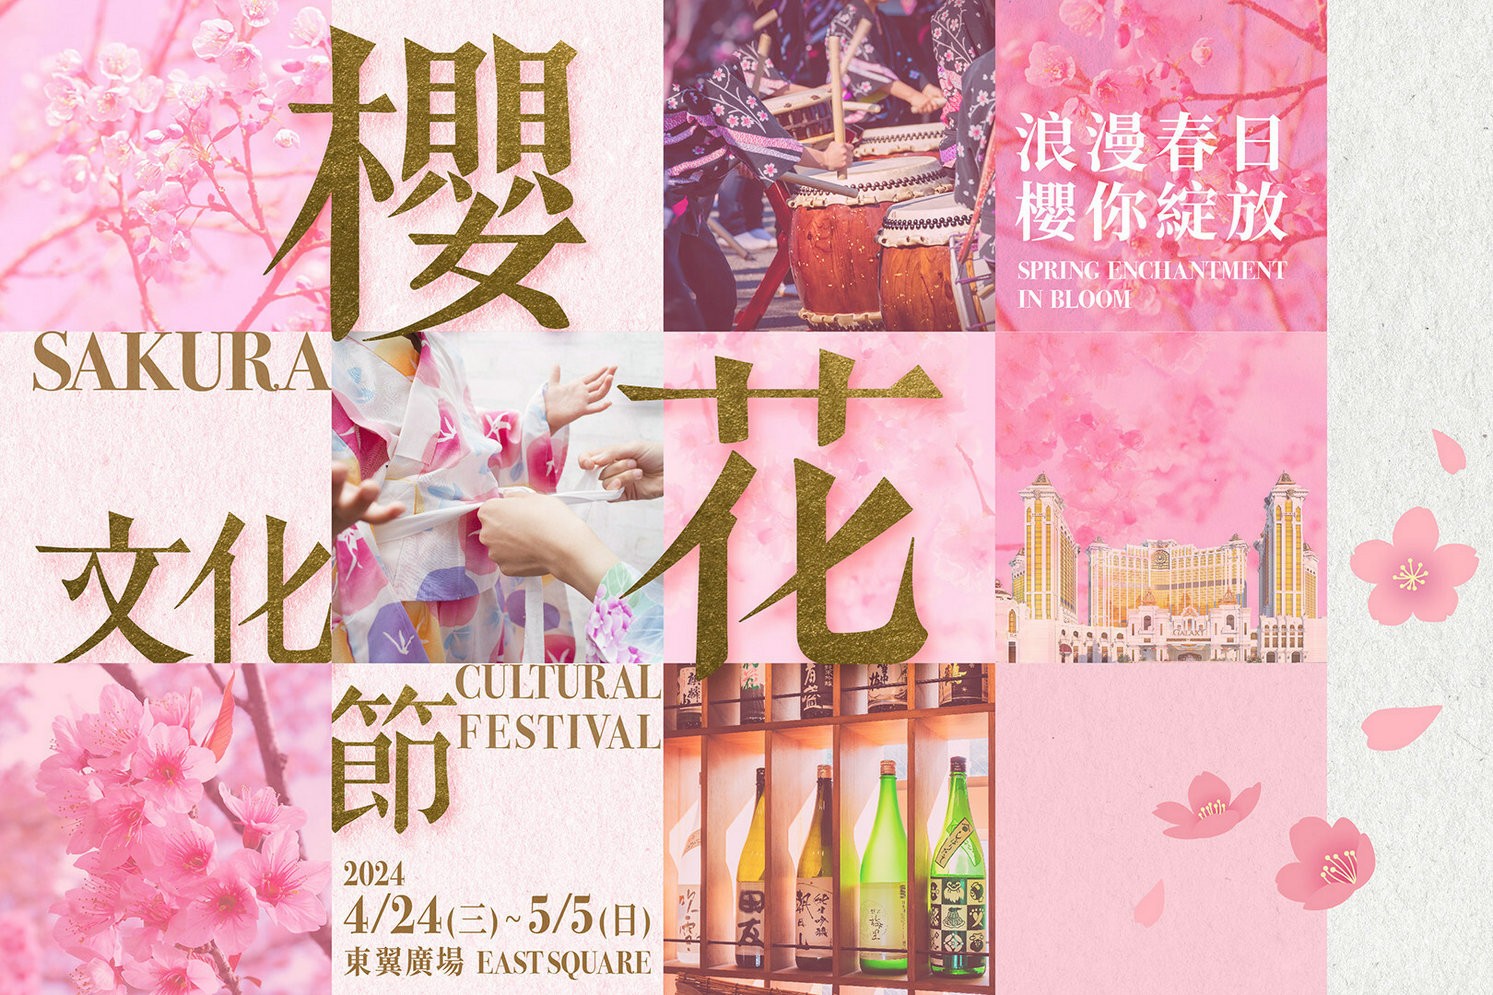 Galaxy Macau's Sakura Cultural Festival Blooms with Romantic Spring Vibes